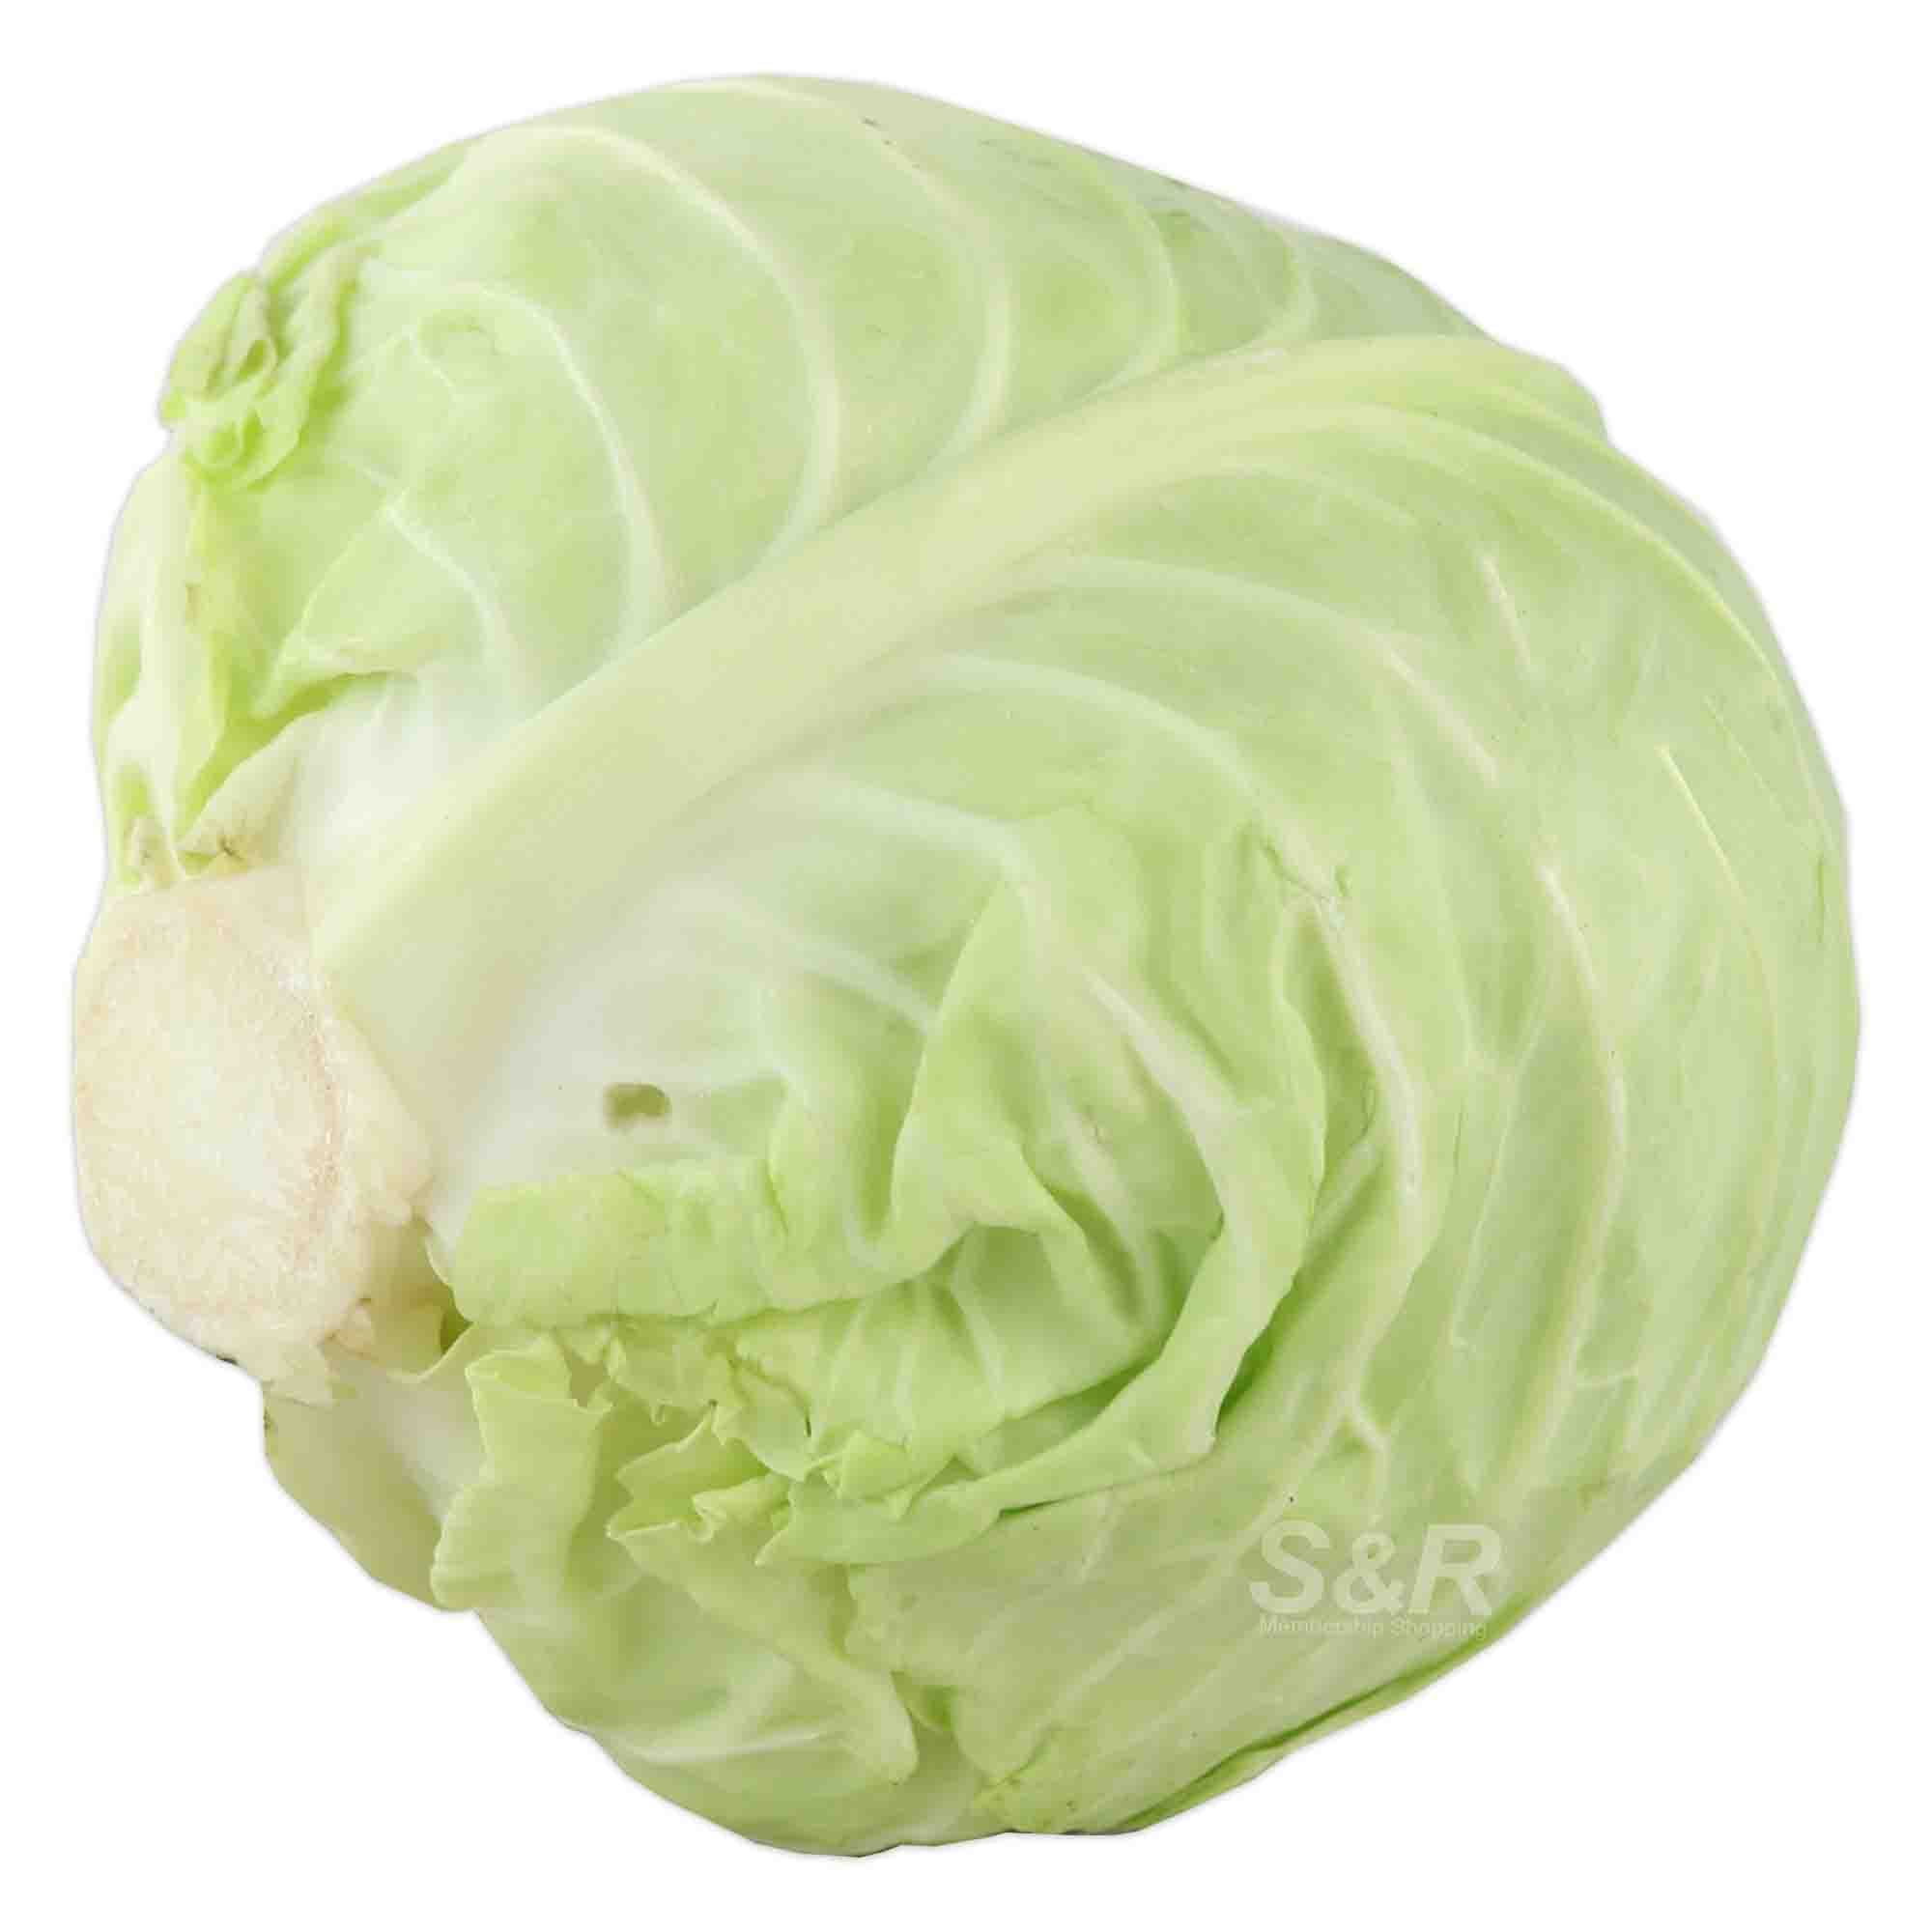 S&R Scorpio Cabbage approx. 1kg